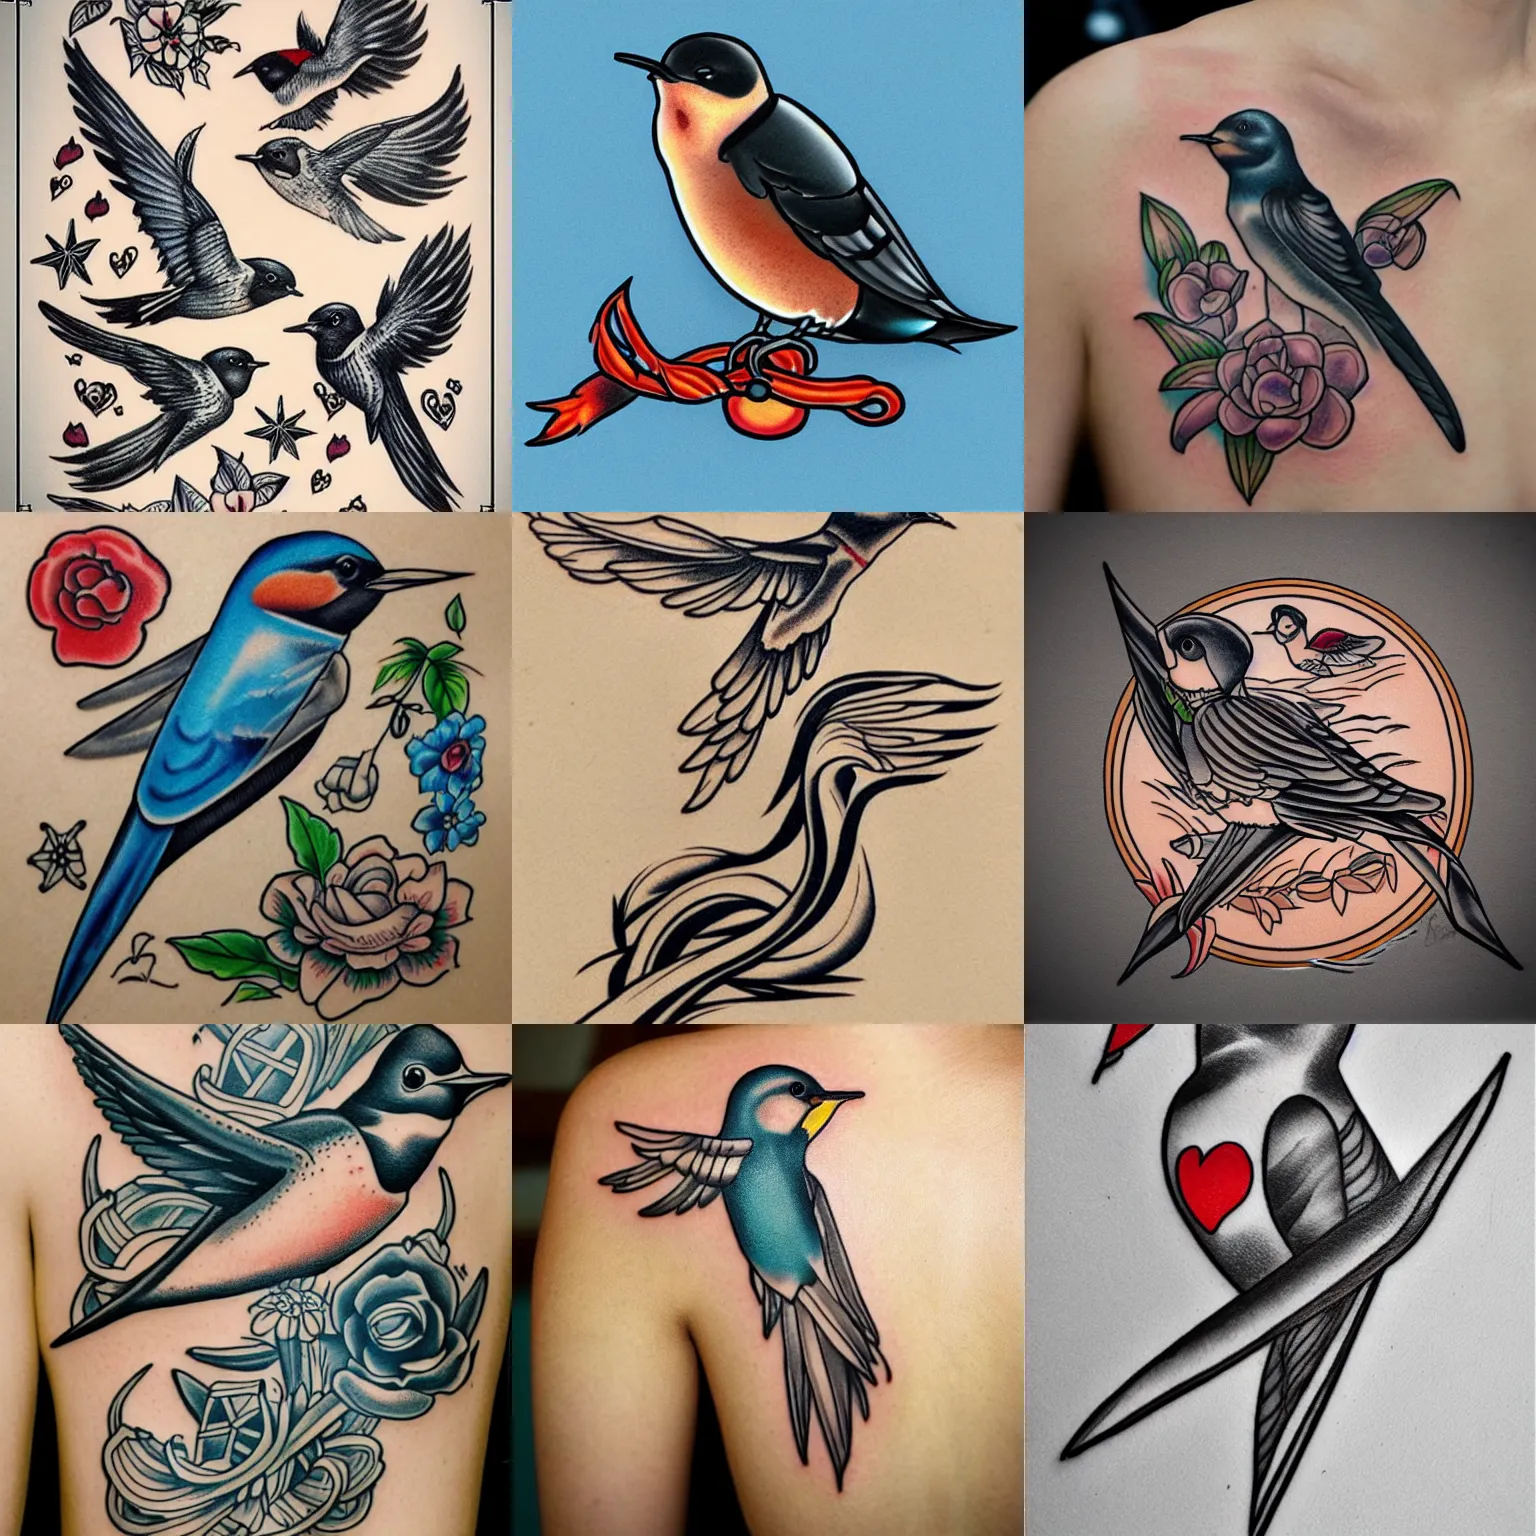 ZEN TATTOO on Tumblr: #swallow #bird #tattoo #flash with a #little #flower  :) #zentattoo #tattooed #ink #inkedup #inked #tattooshop #Vancity...